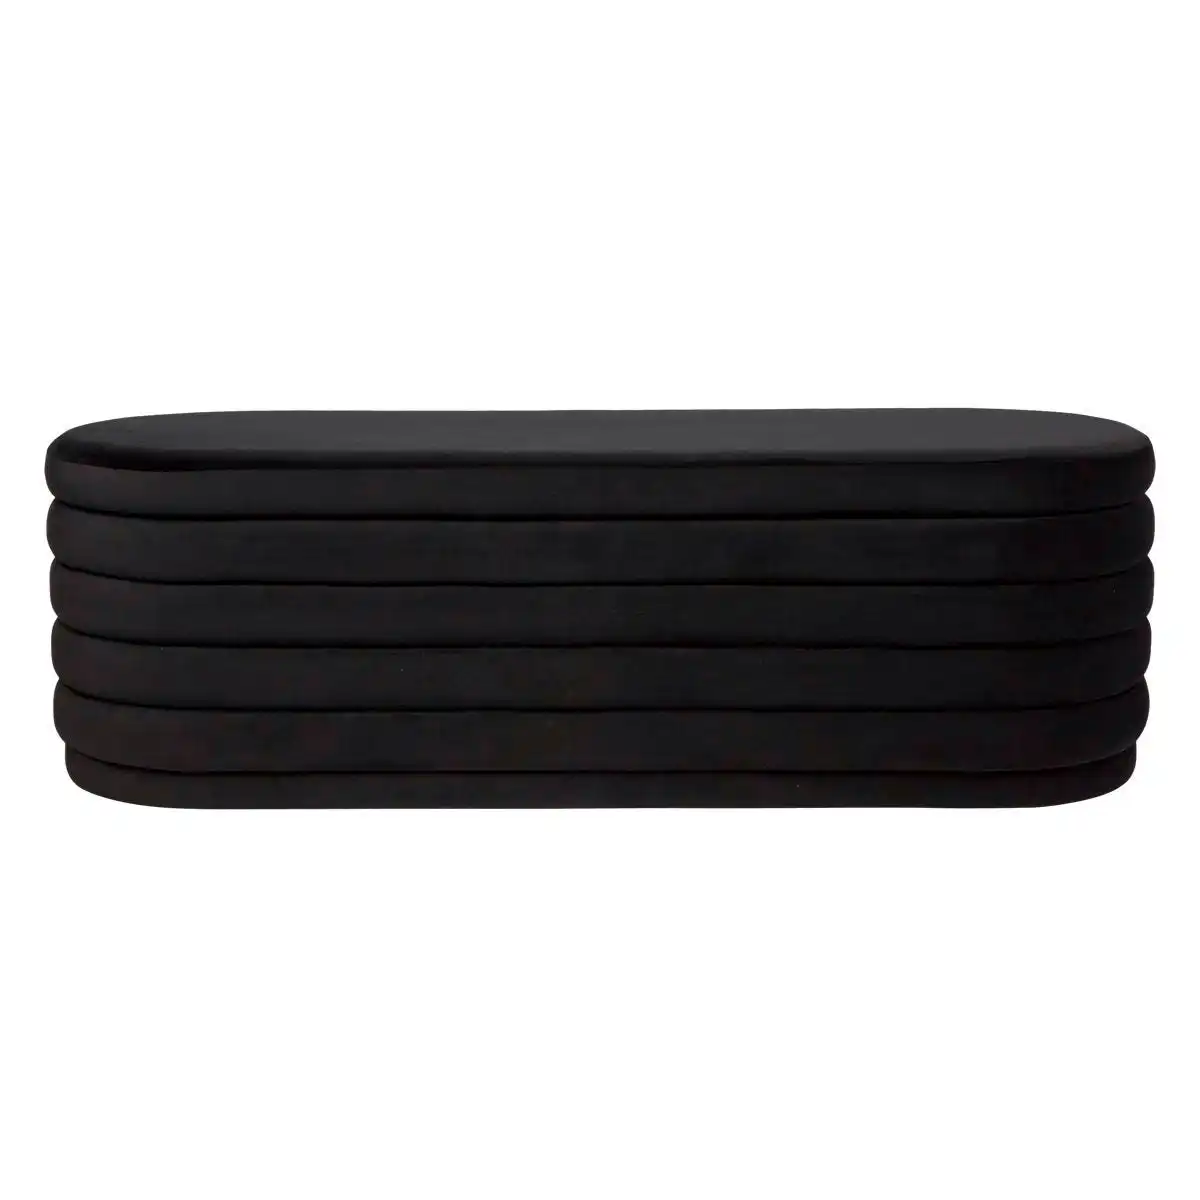 Demi Storage Bench Ottoman - Black Velvet